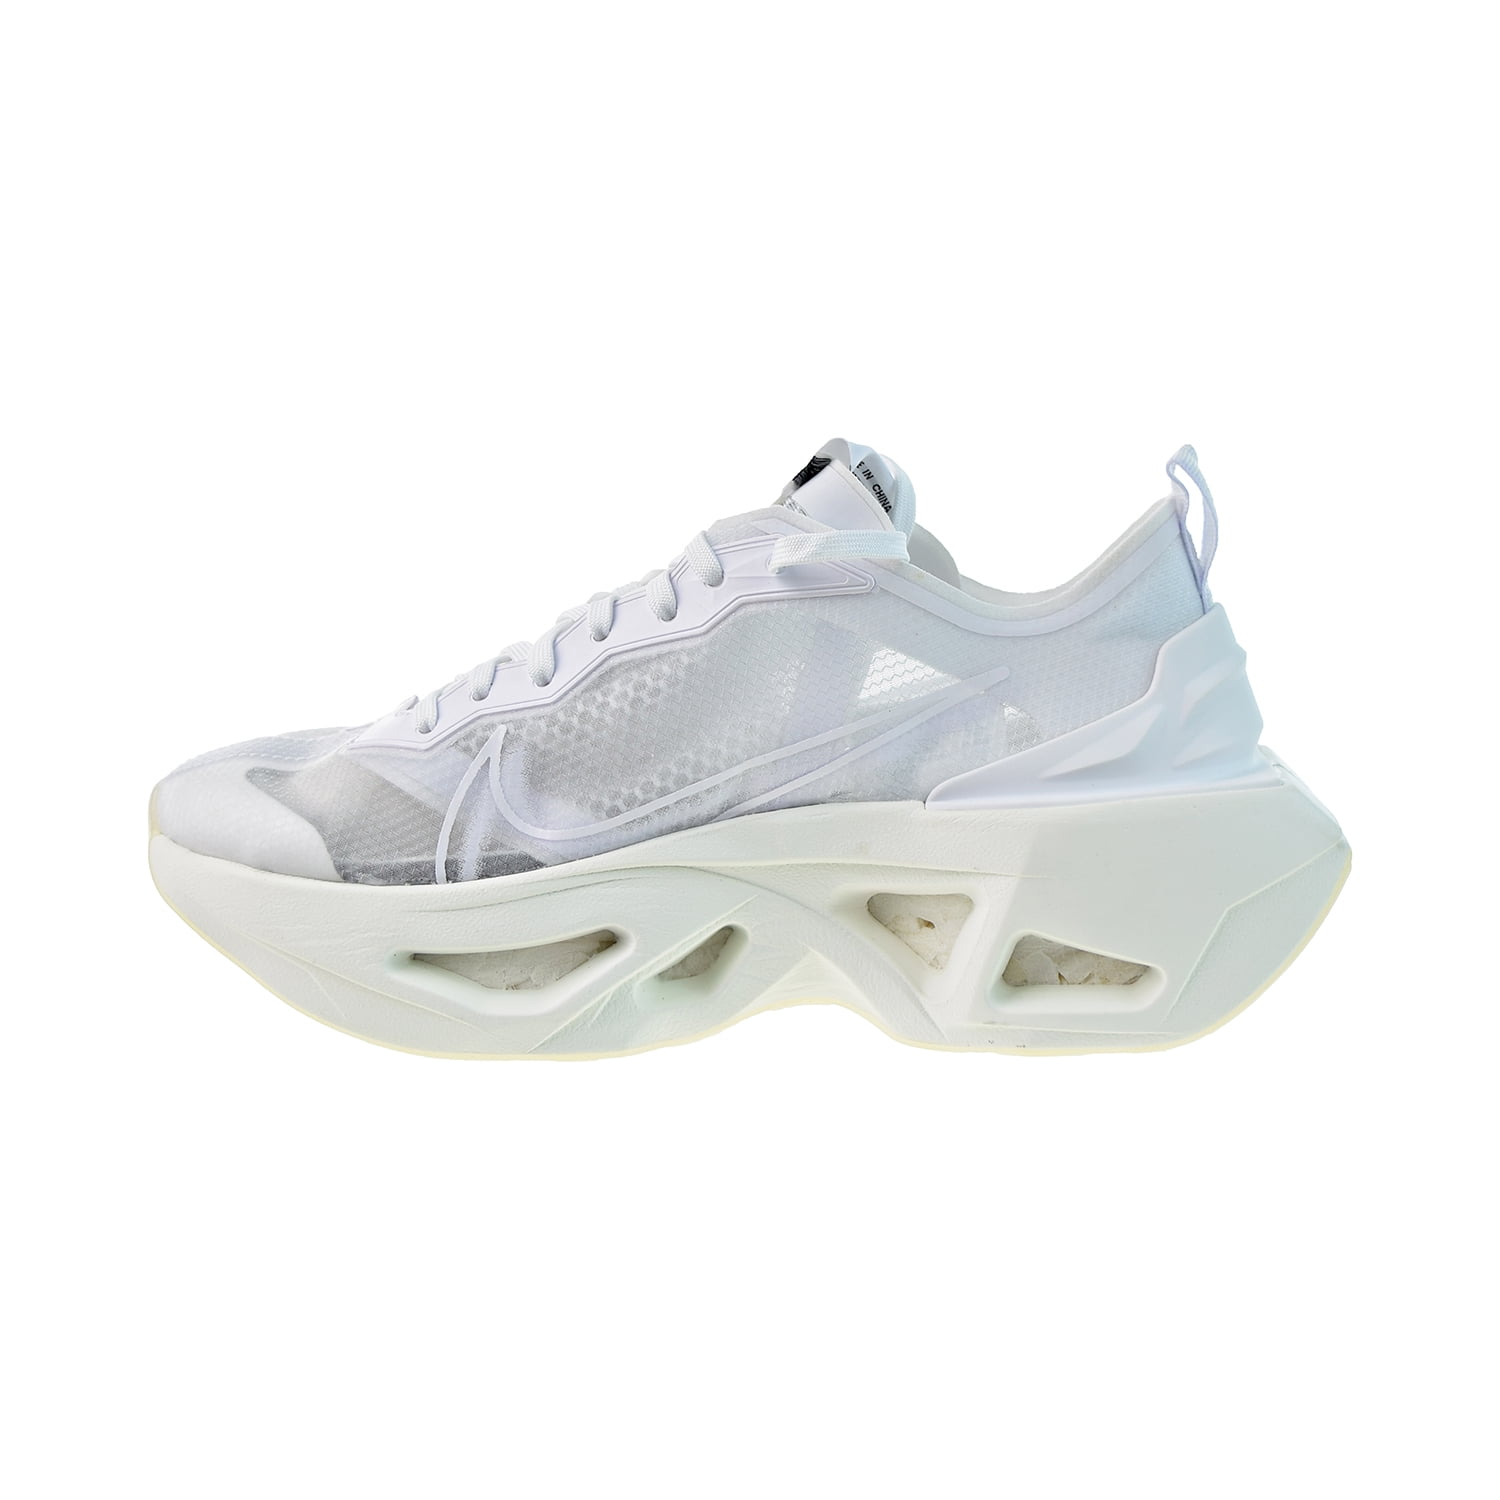 paling snorkel romantisch Nike Zoom X Vista Grind Women's Shoes White-Sail cq9500-101 - Walmart.com